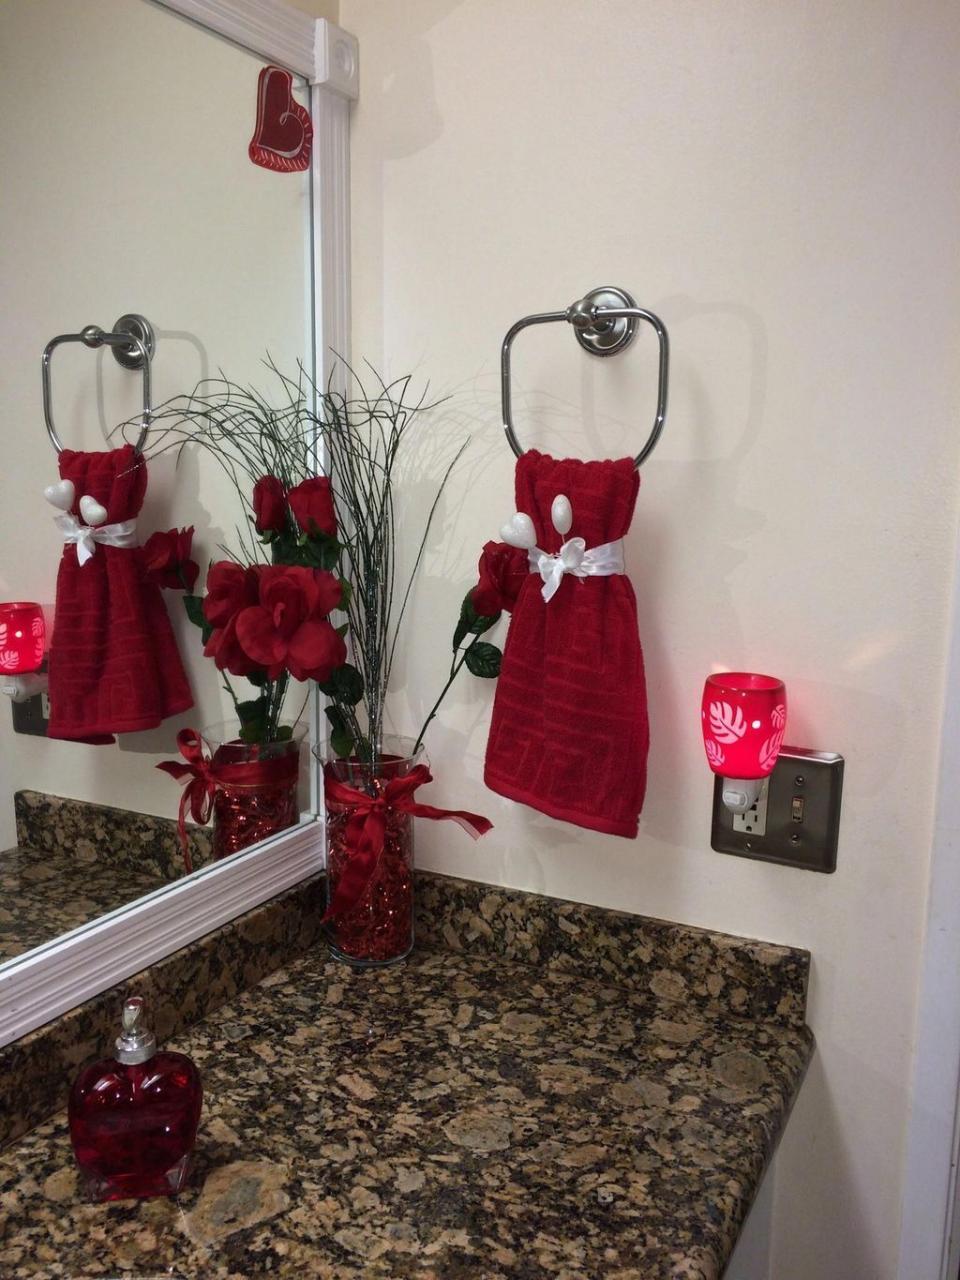 Fabulous Valentine Bathroom Decor Ideas in 2020 Red bathroom decor